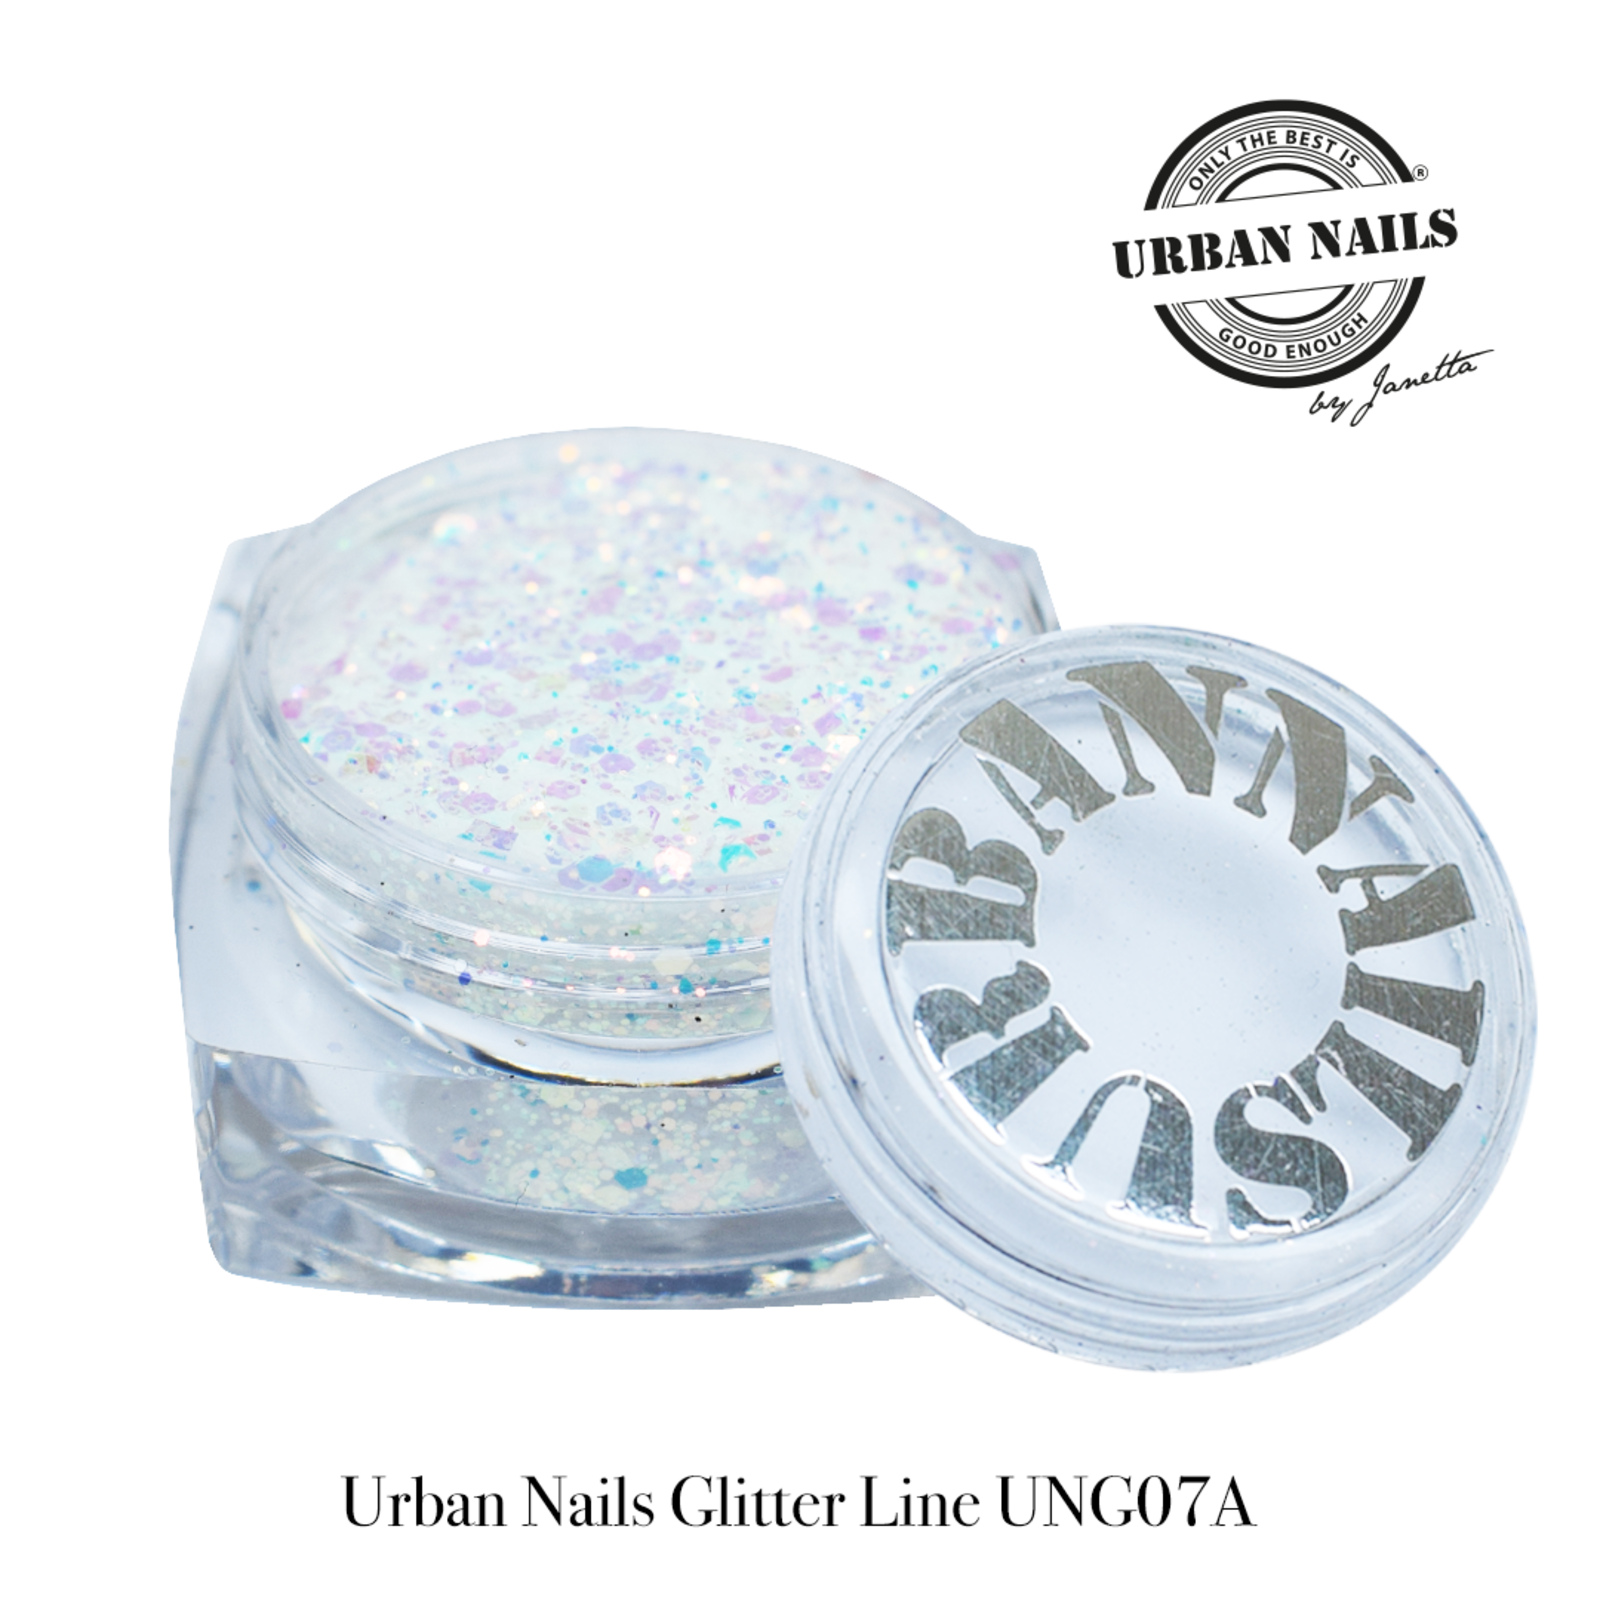 Urban nails Glitter line UNG7-A